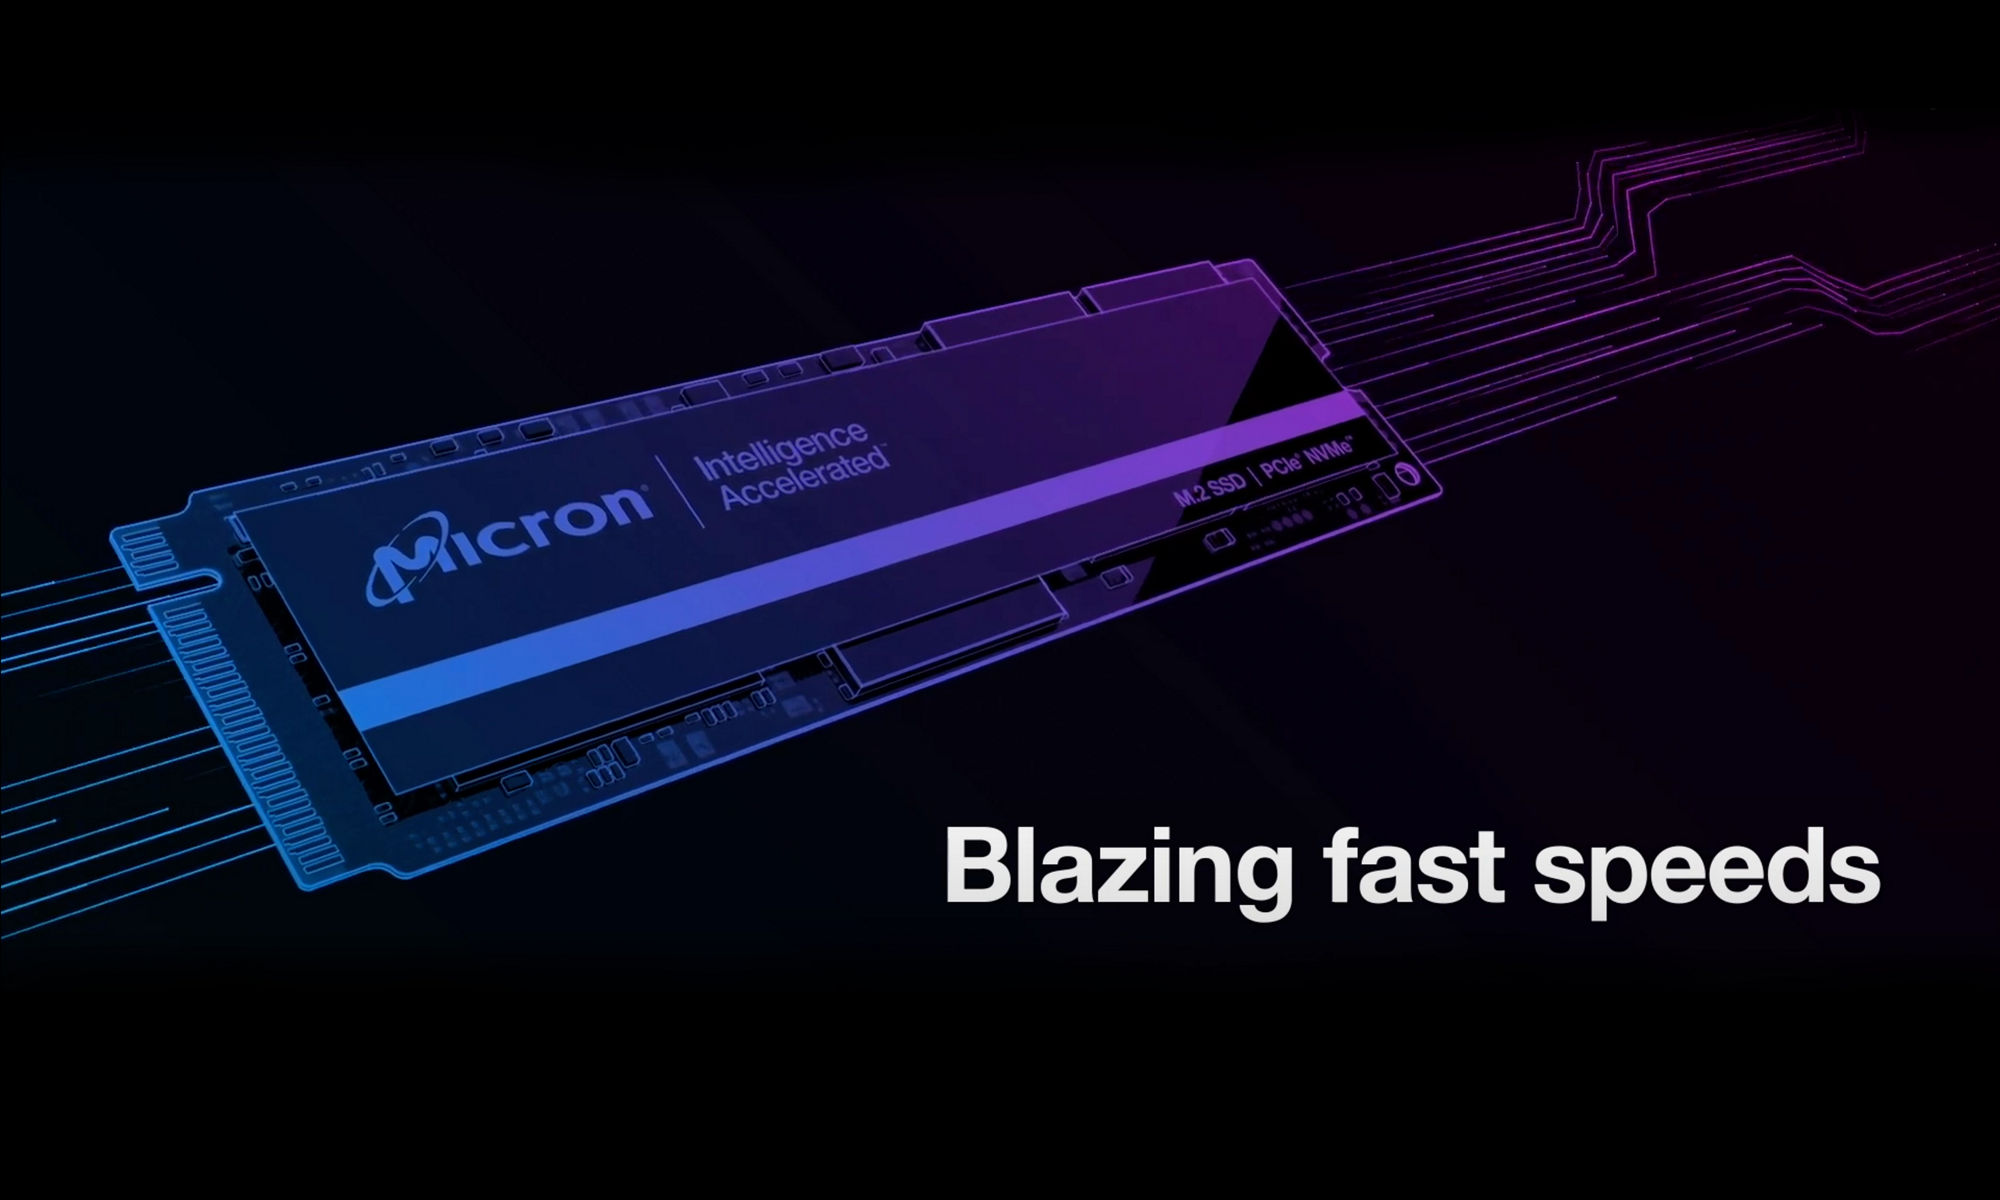 Micron SSD blazing fast speeds video still